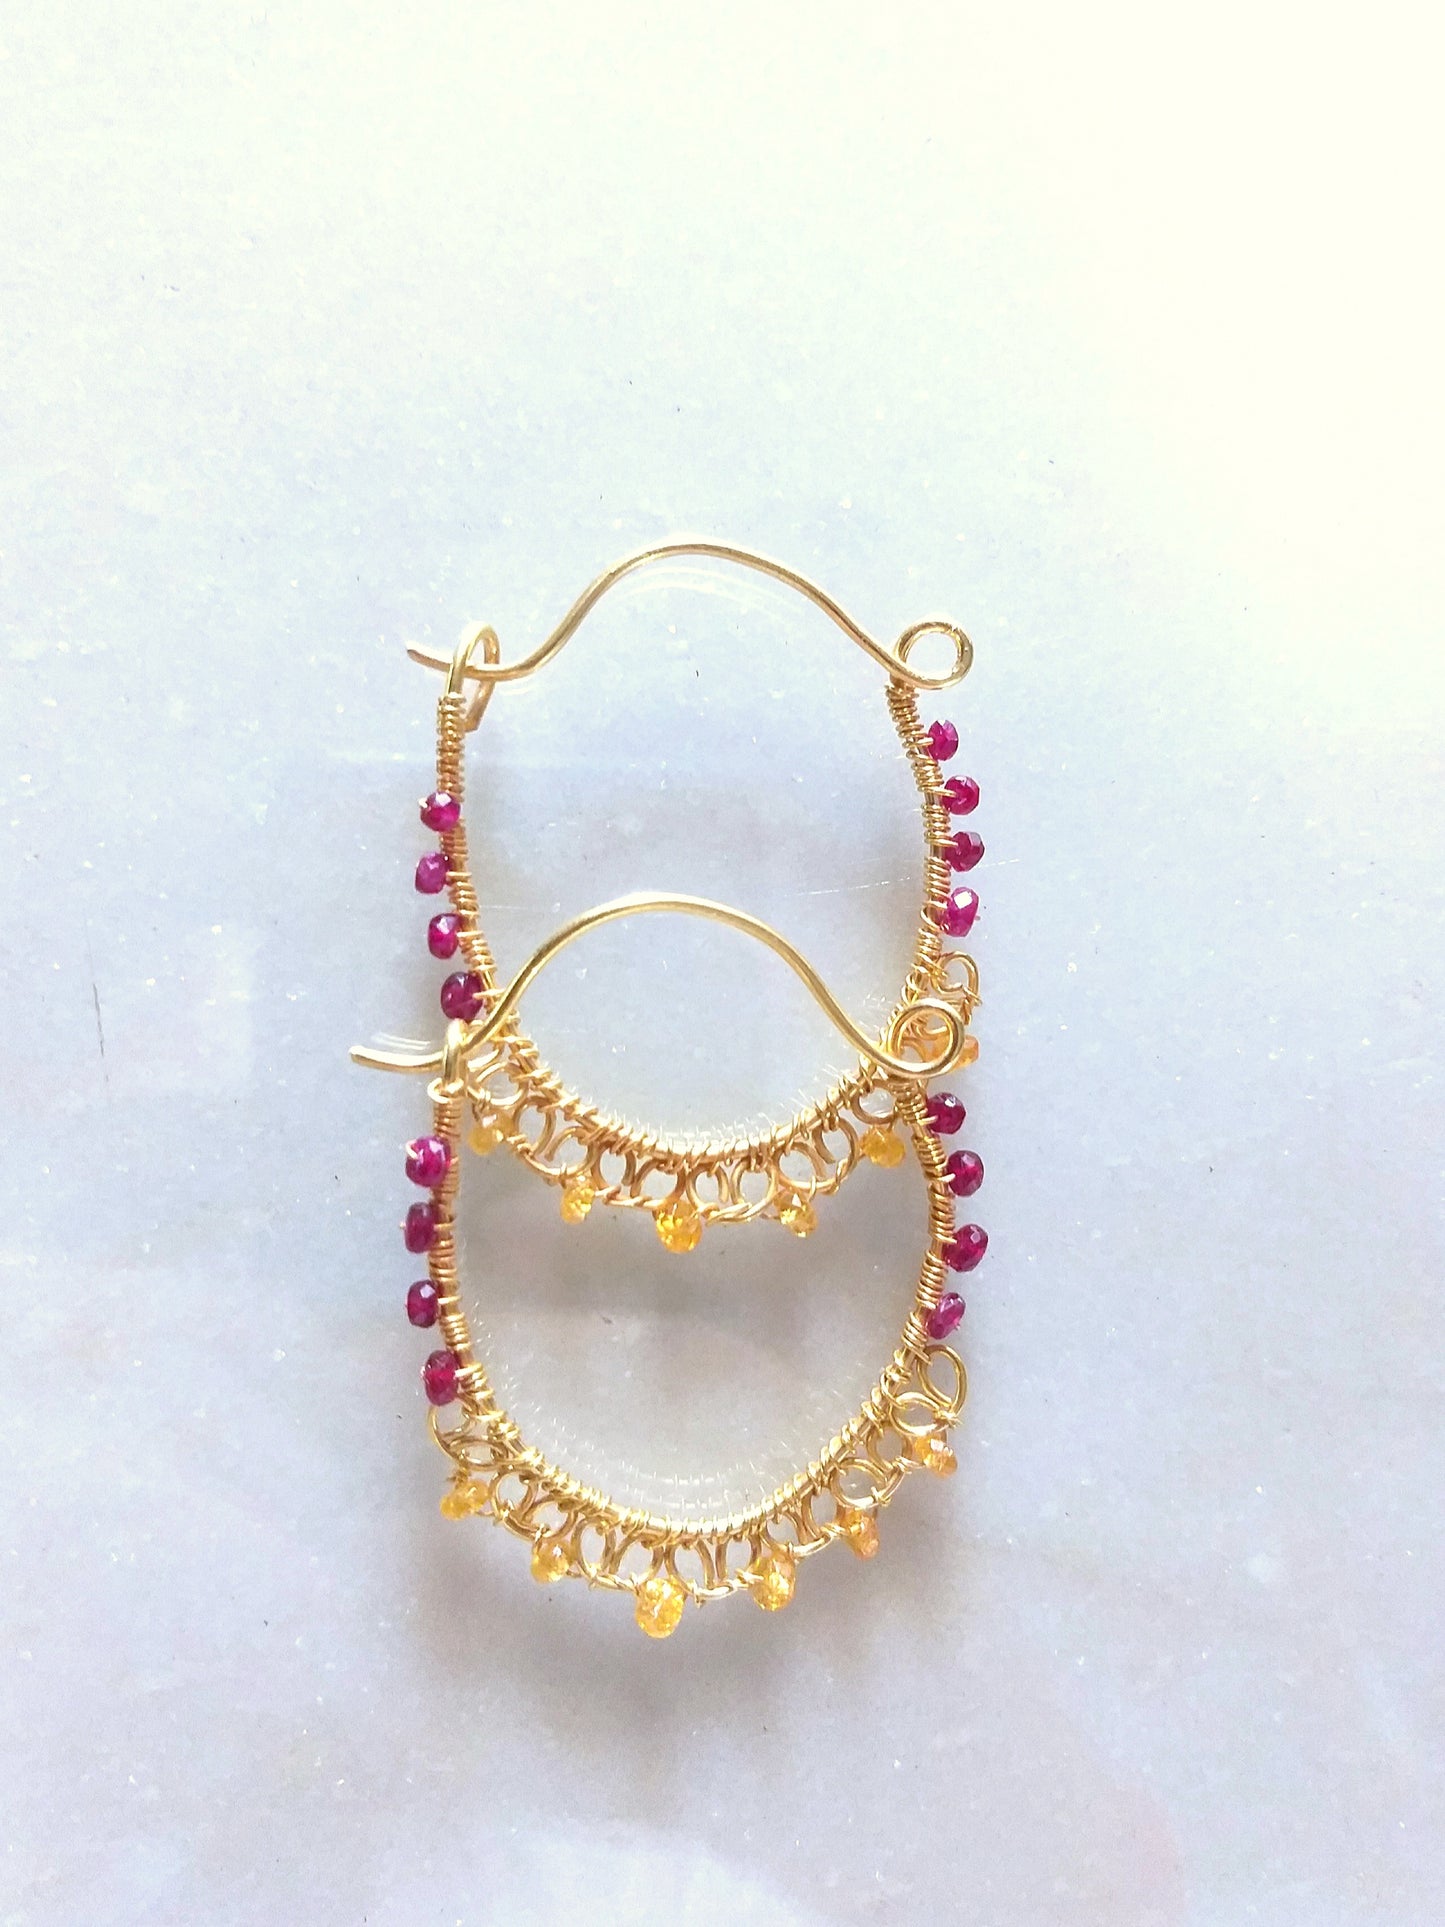 Ruby and Orange Garnet Beads Hoops, 22k Gold Micron Plated Handmade Earrings